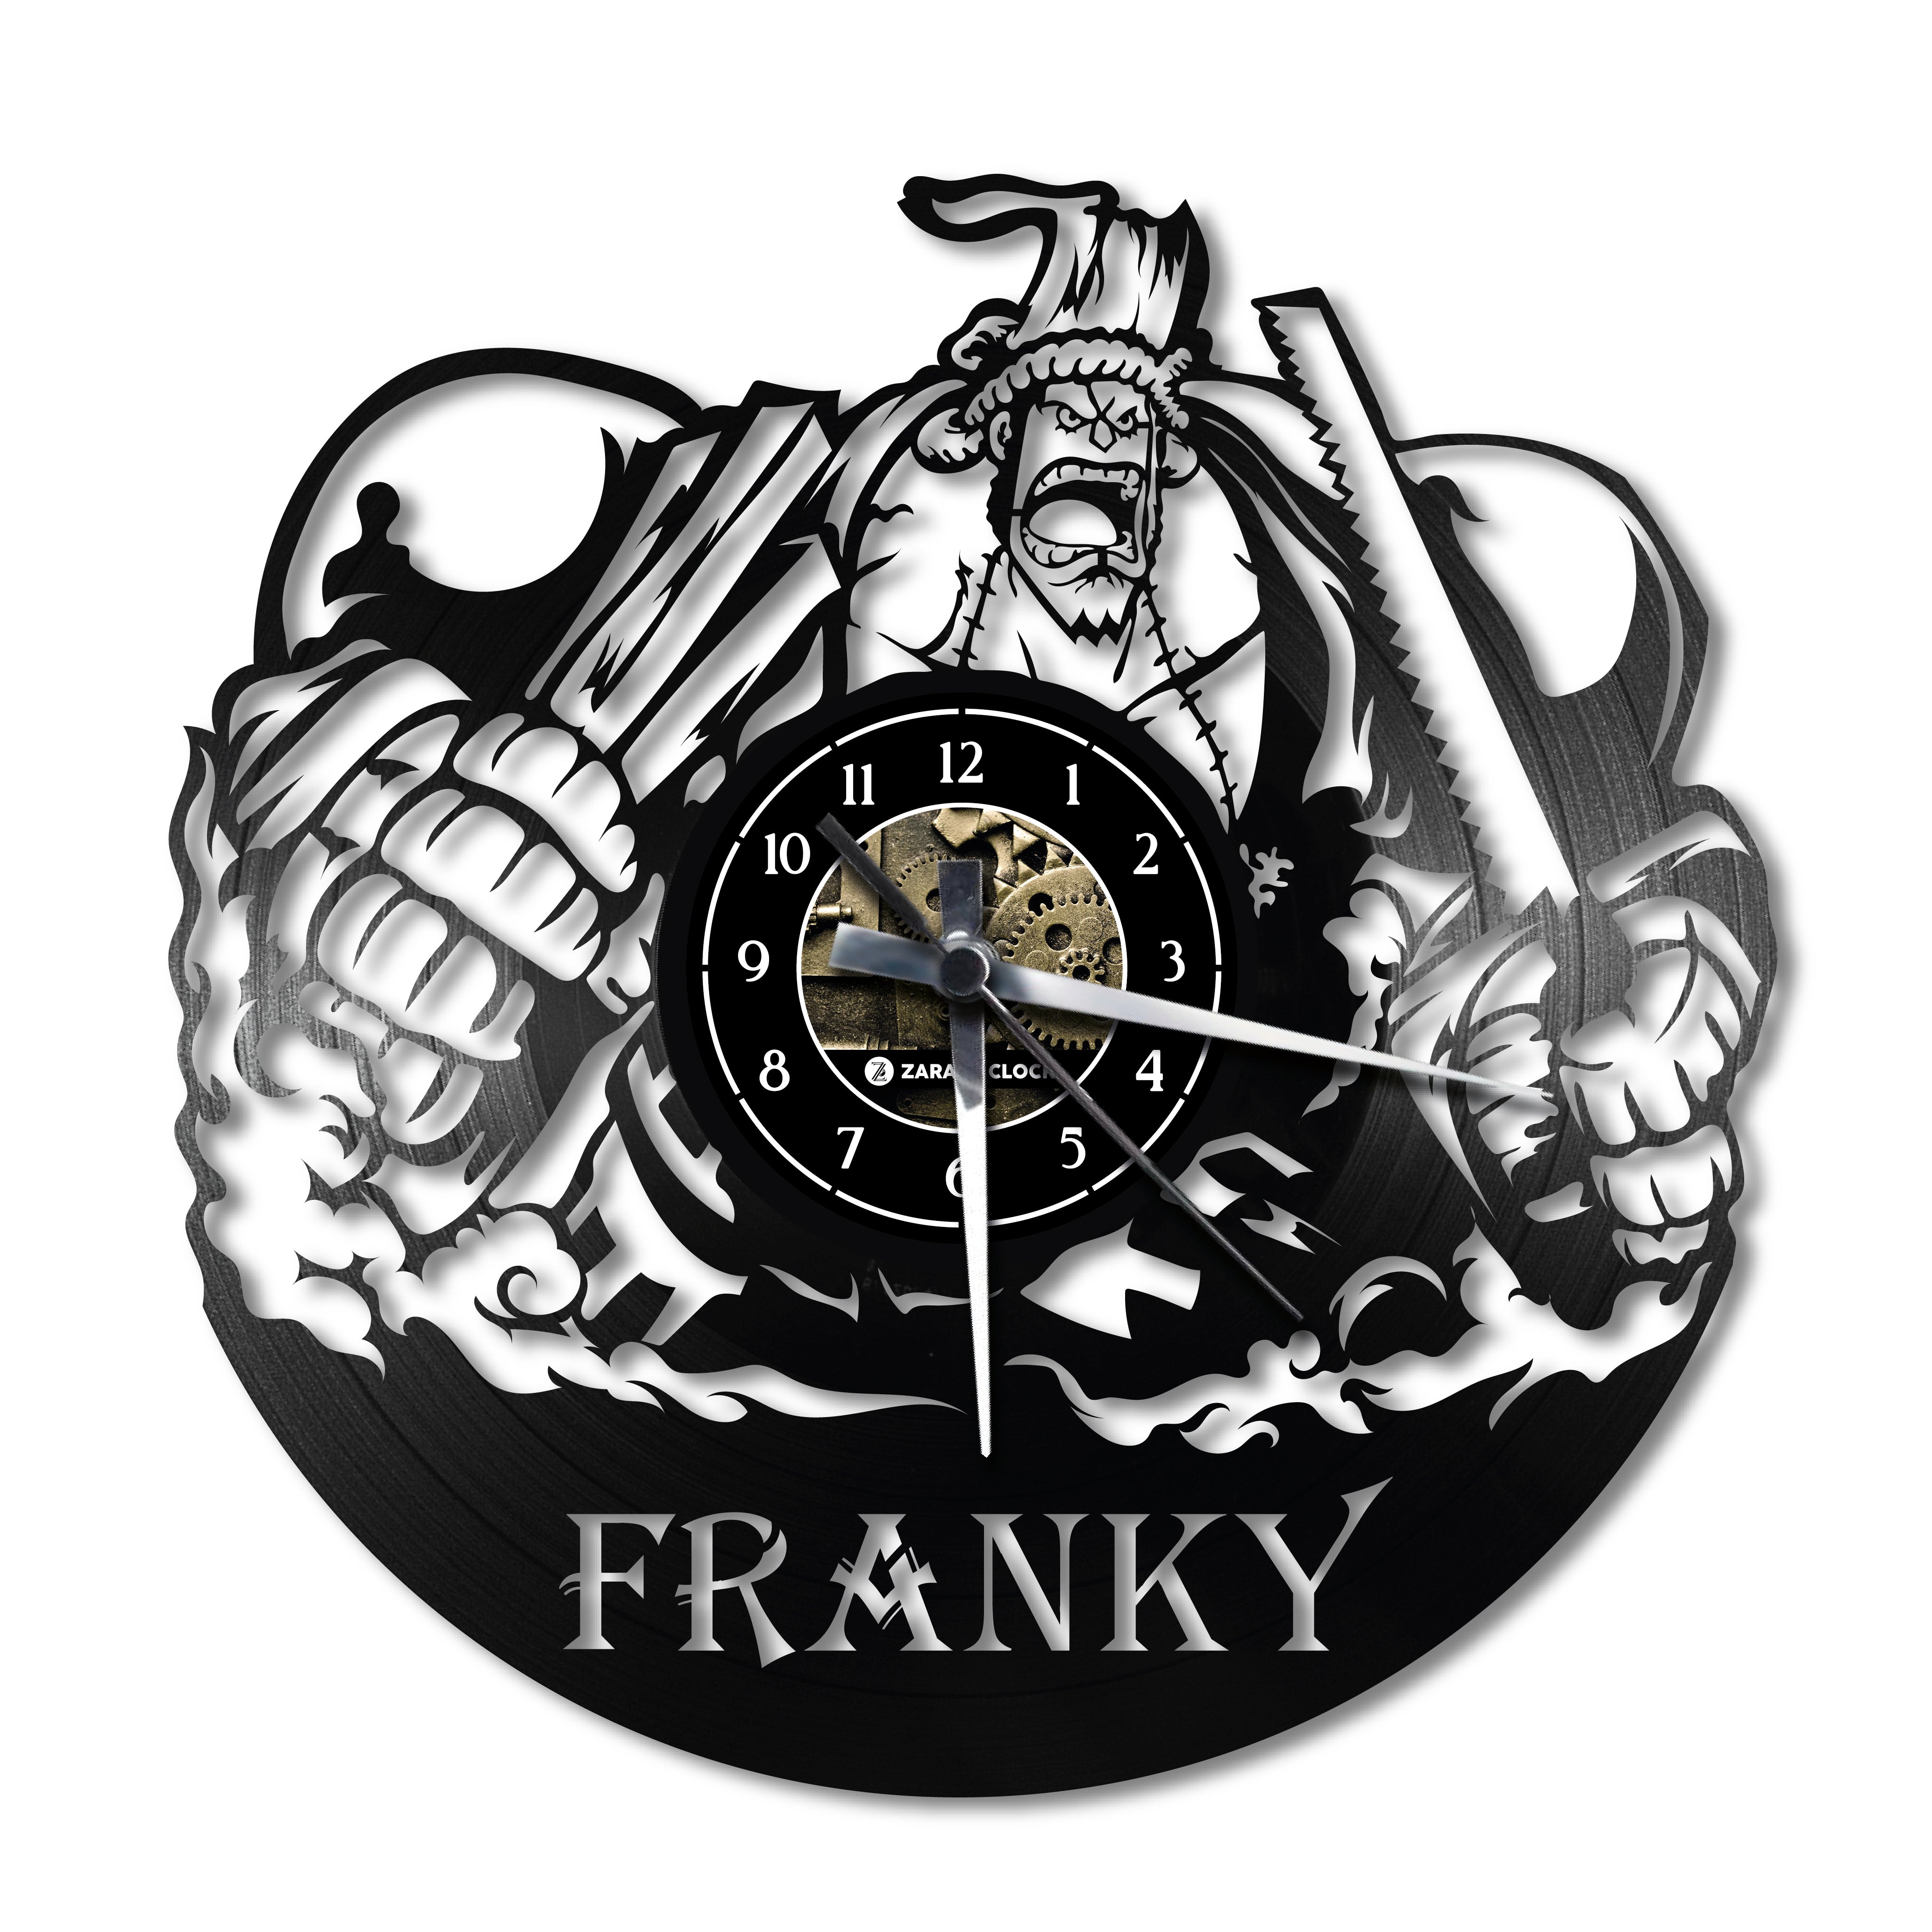 FRANKY-ONE PIECE ✦ orologio in vinile